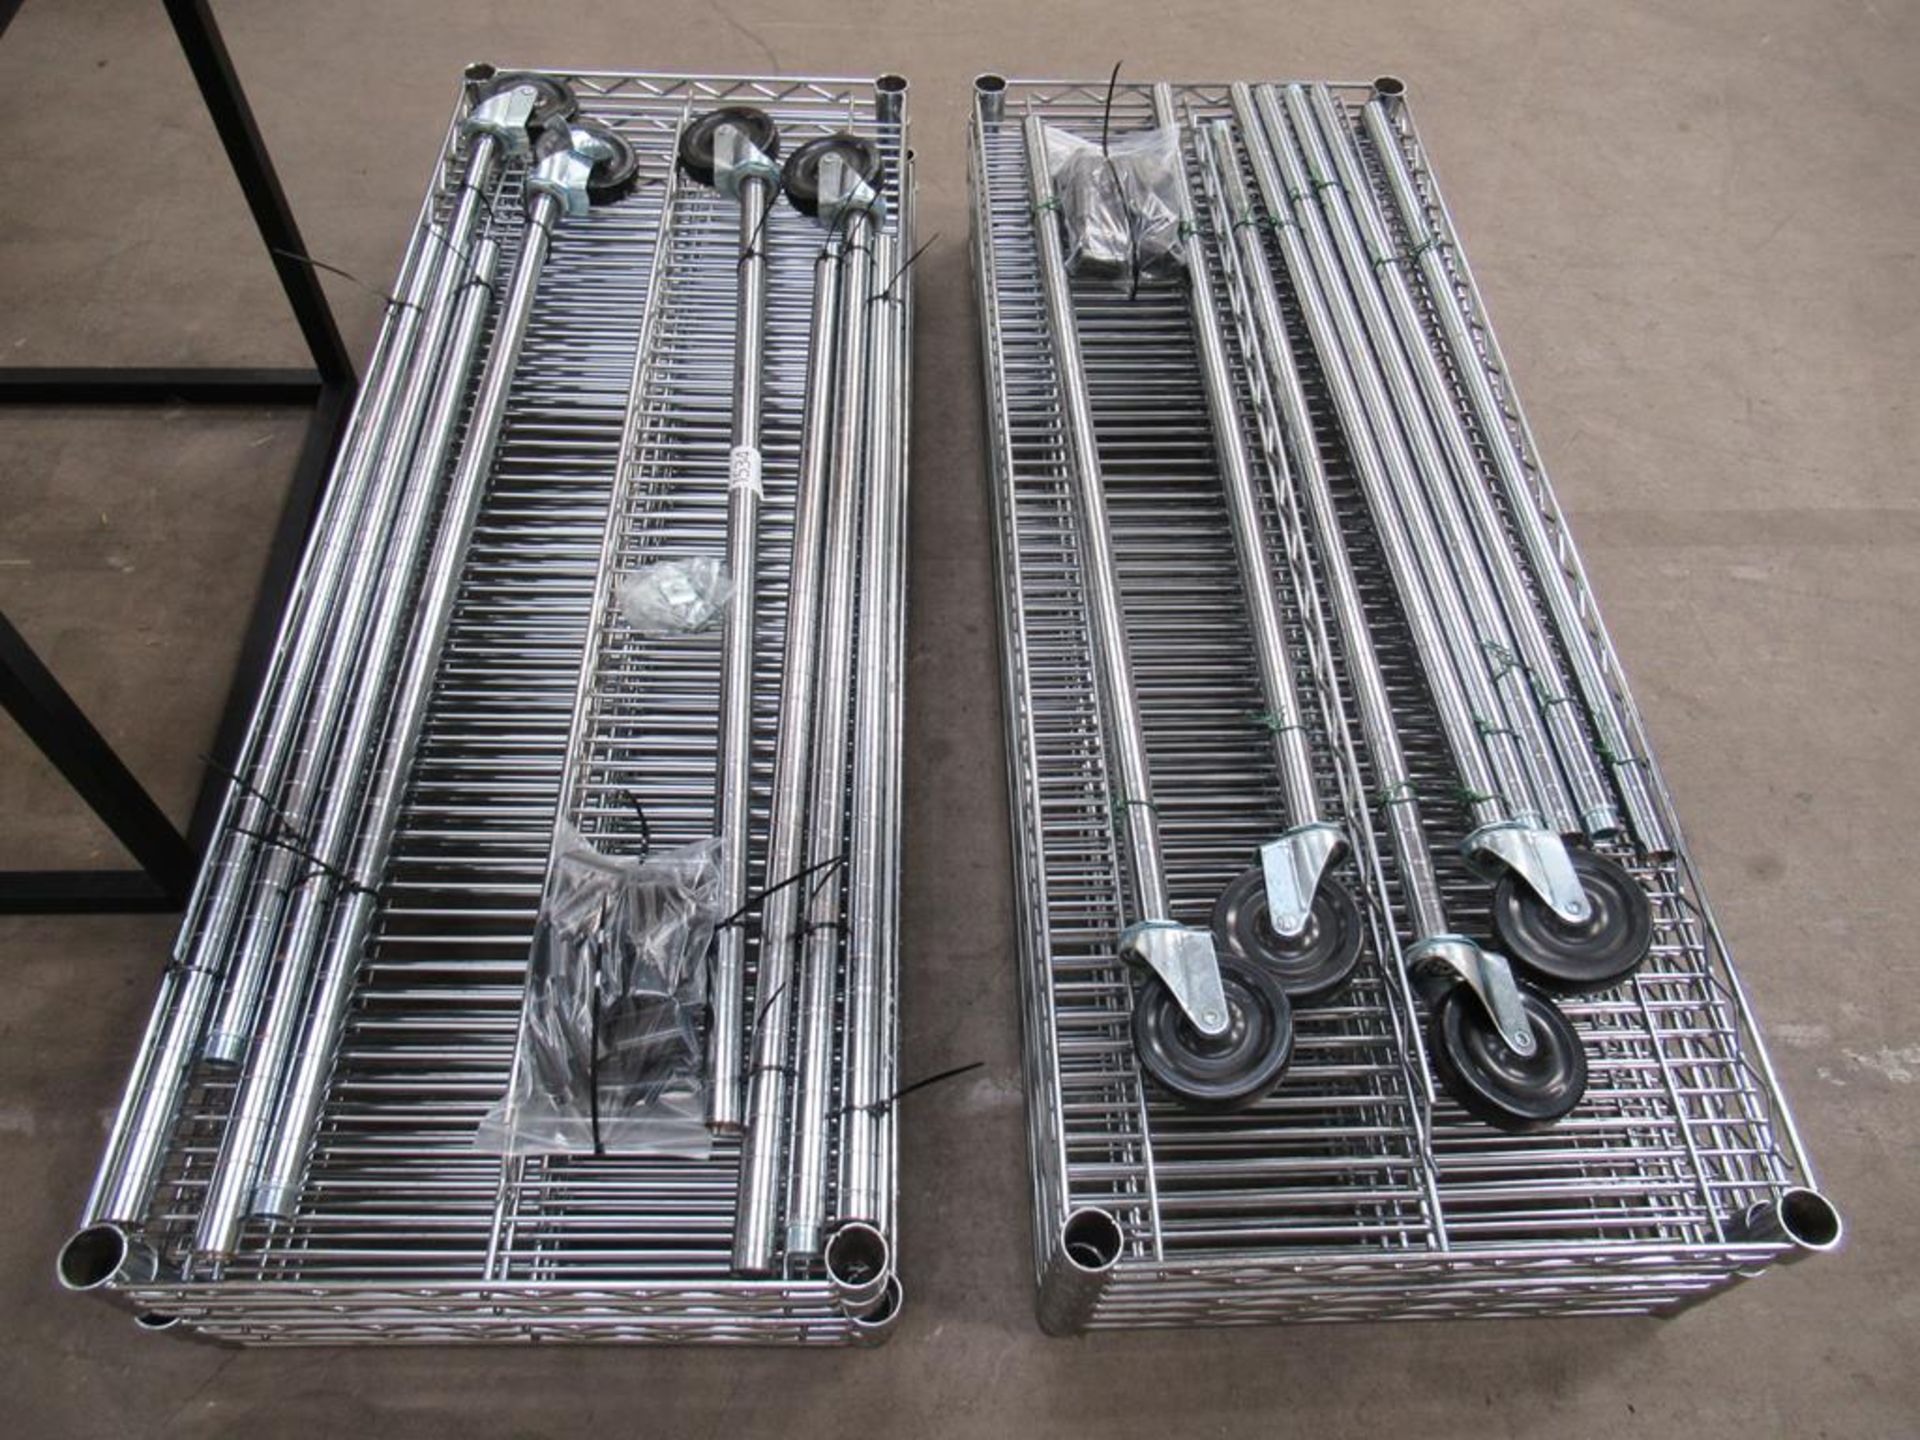 2x Dismantled Chrome Wire Mobie Shelving Units (5 tier each unit). - Image 4 of 4